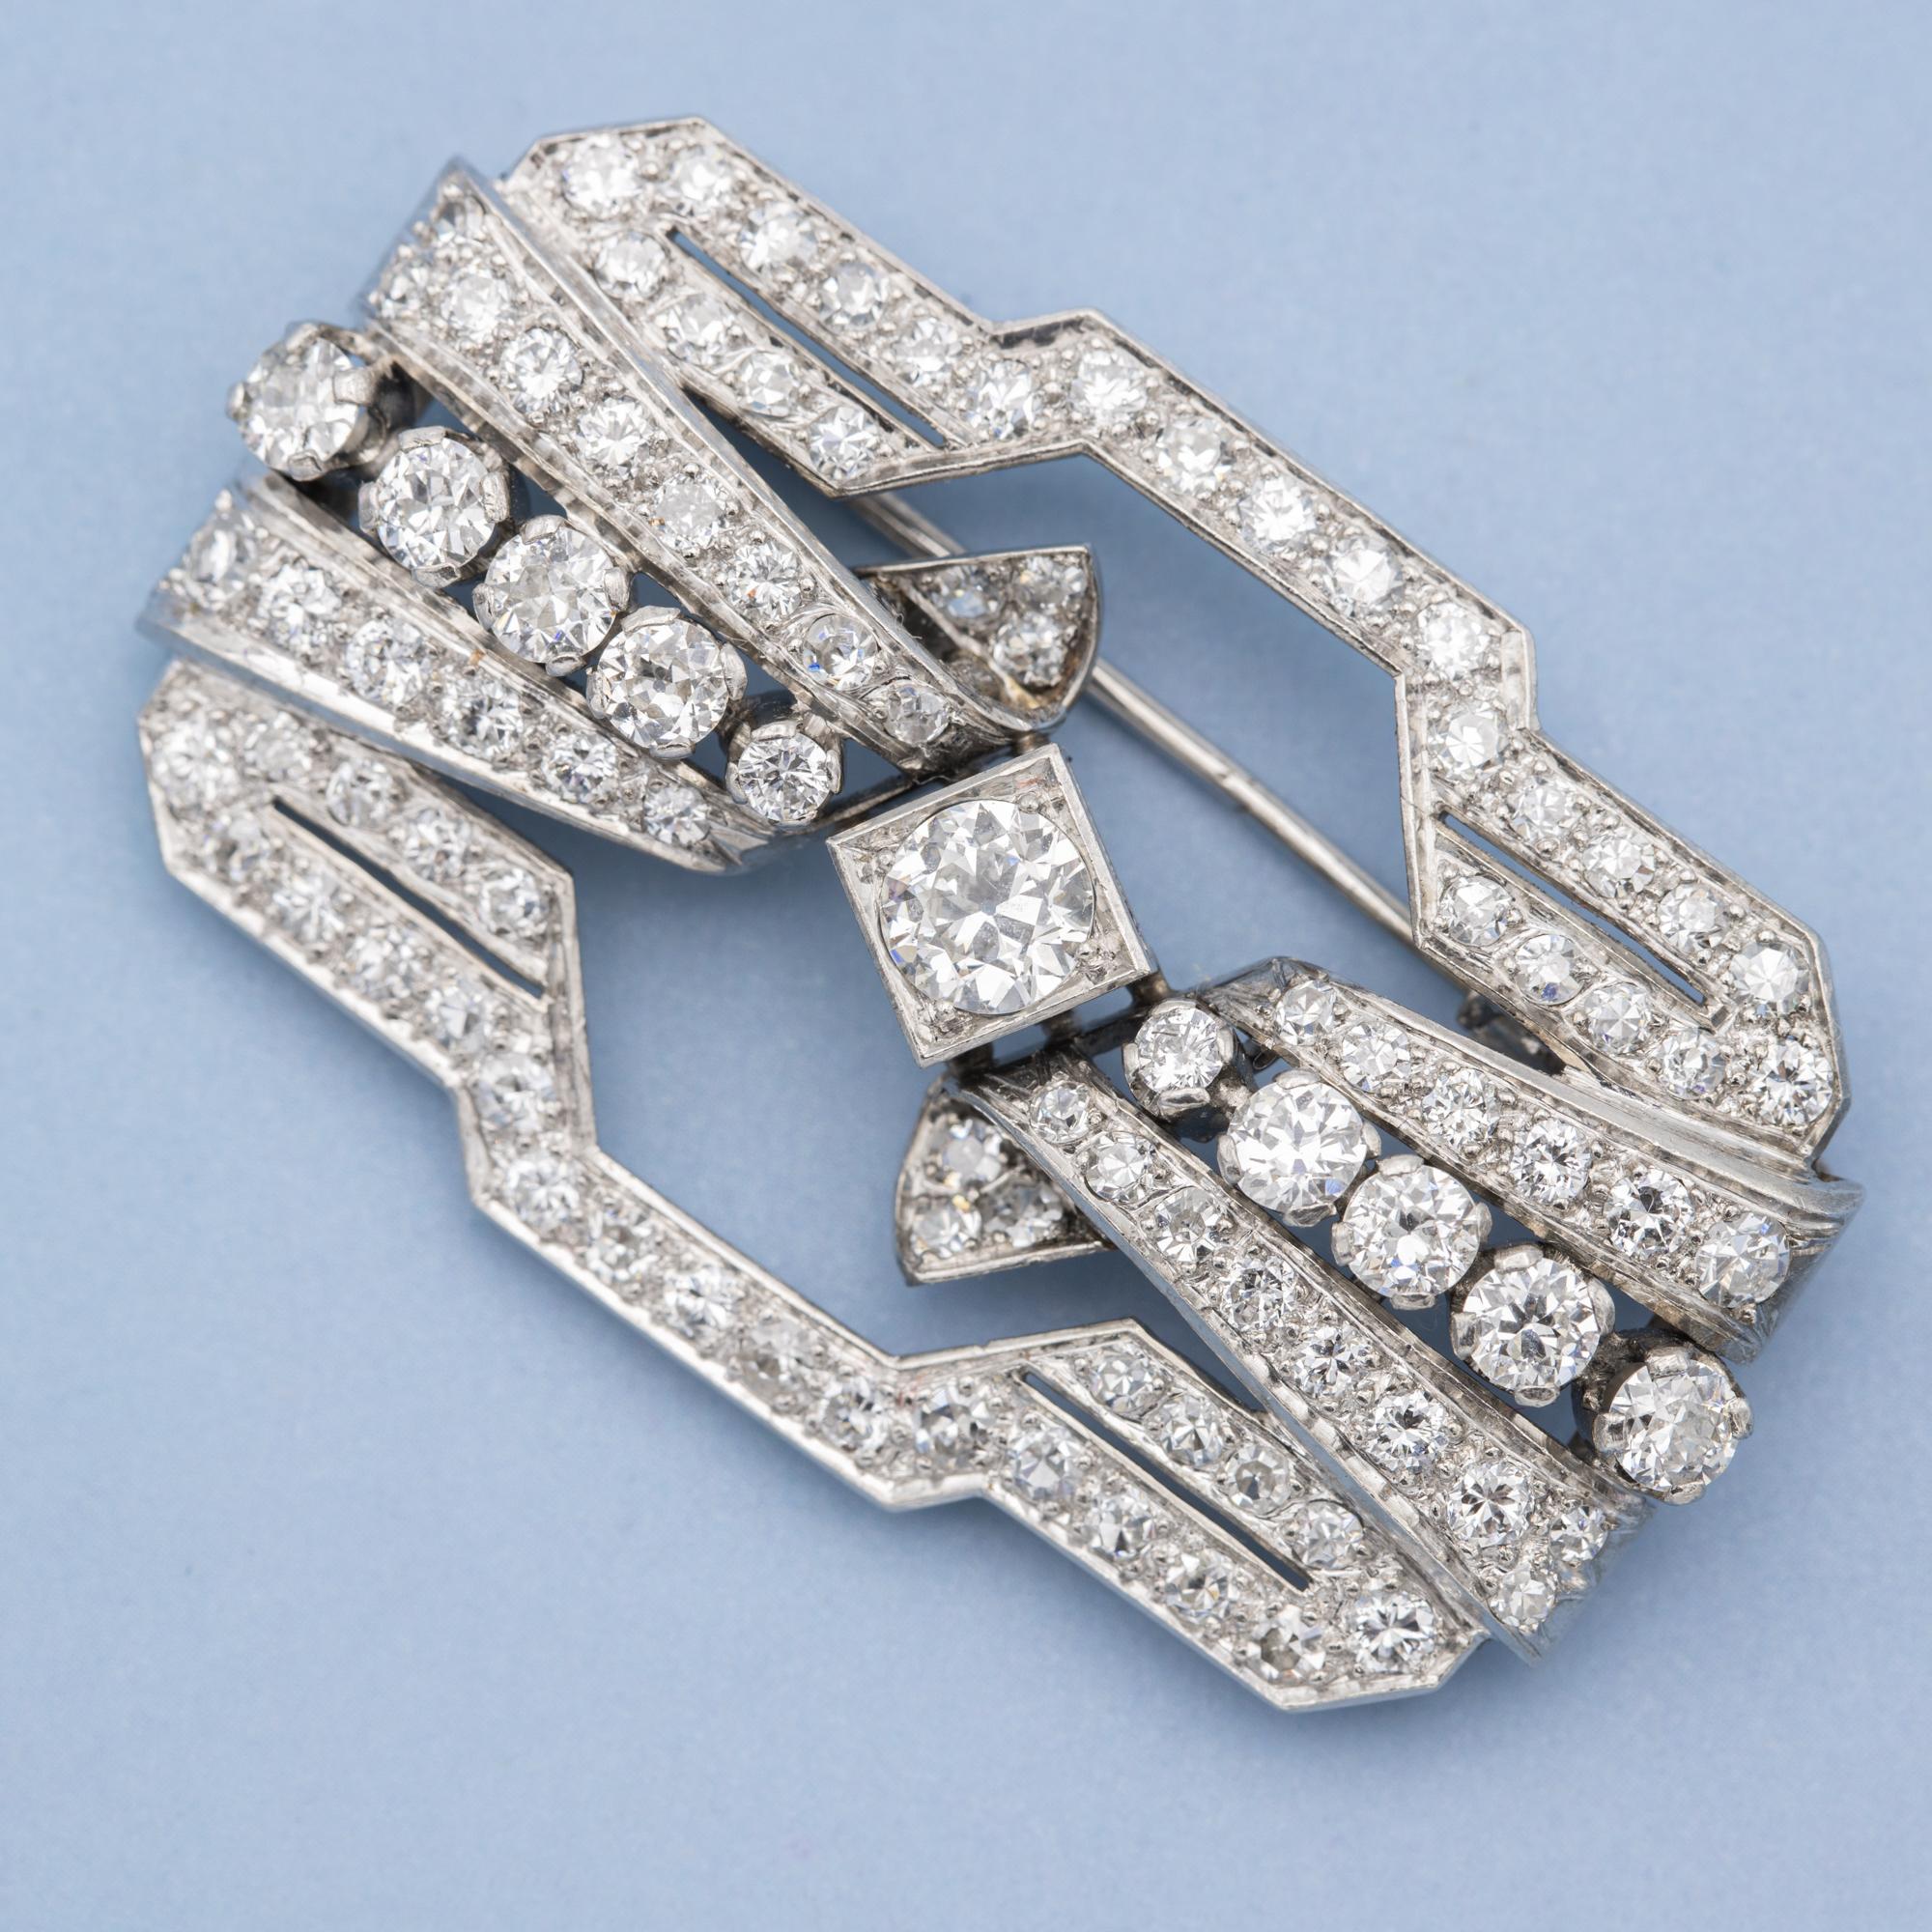 Women's or Men's Art Deco brooch - 3.1 ct diamond - Old cut - Antique jewelry - Platinum 1930  For Sale